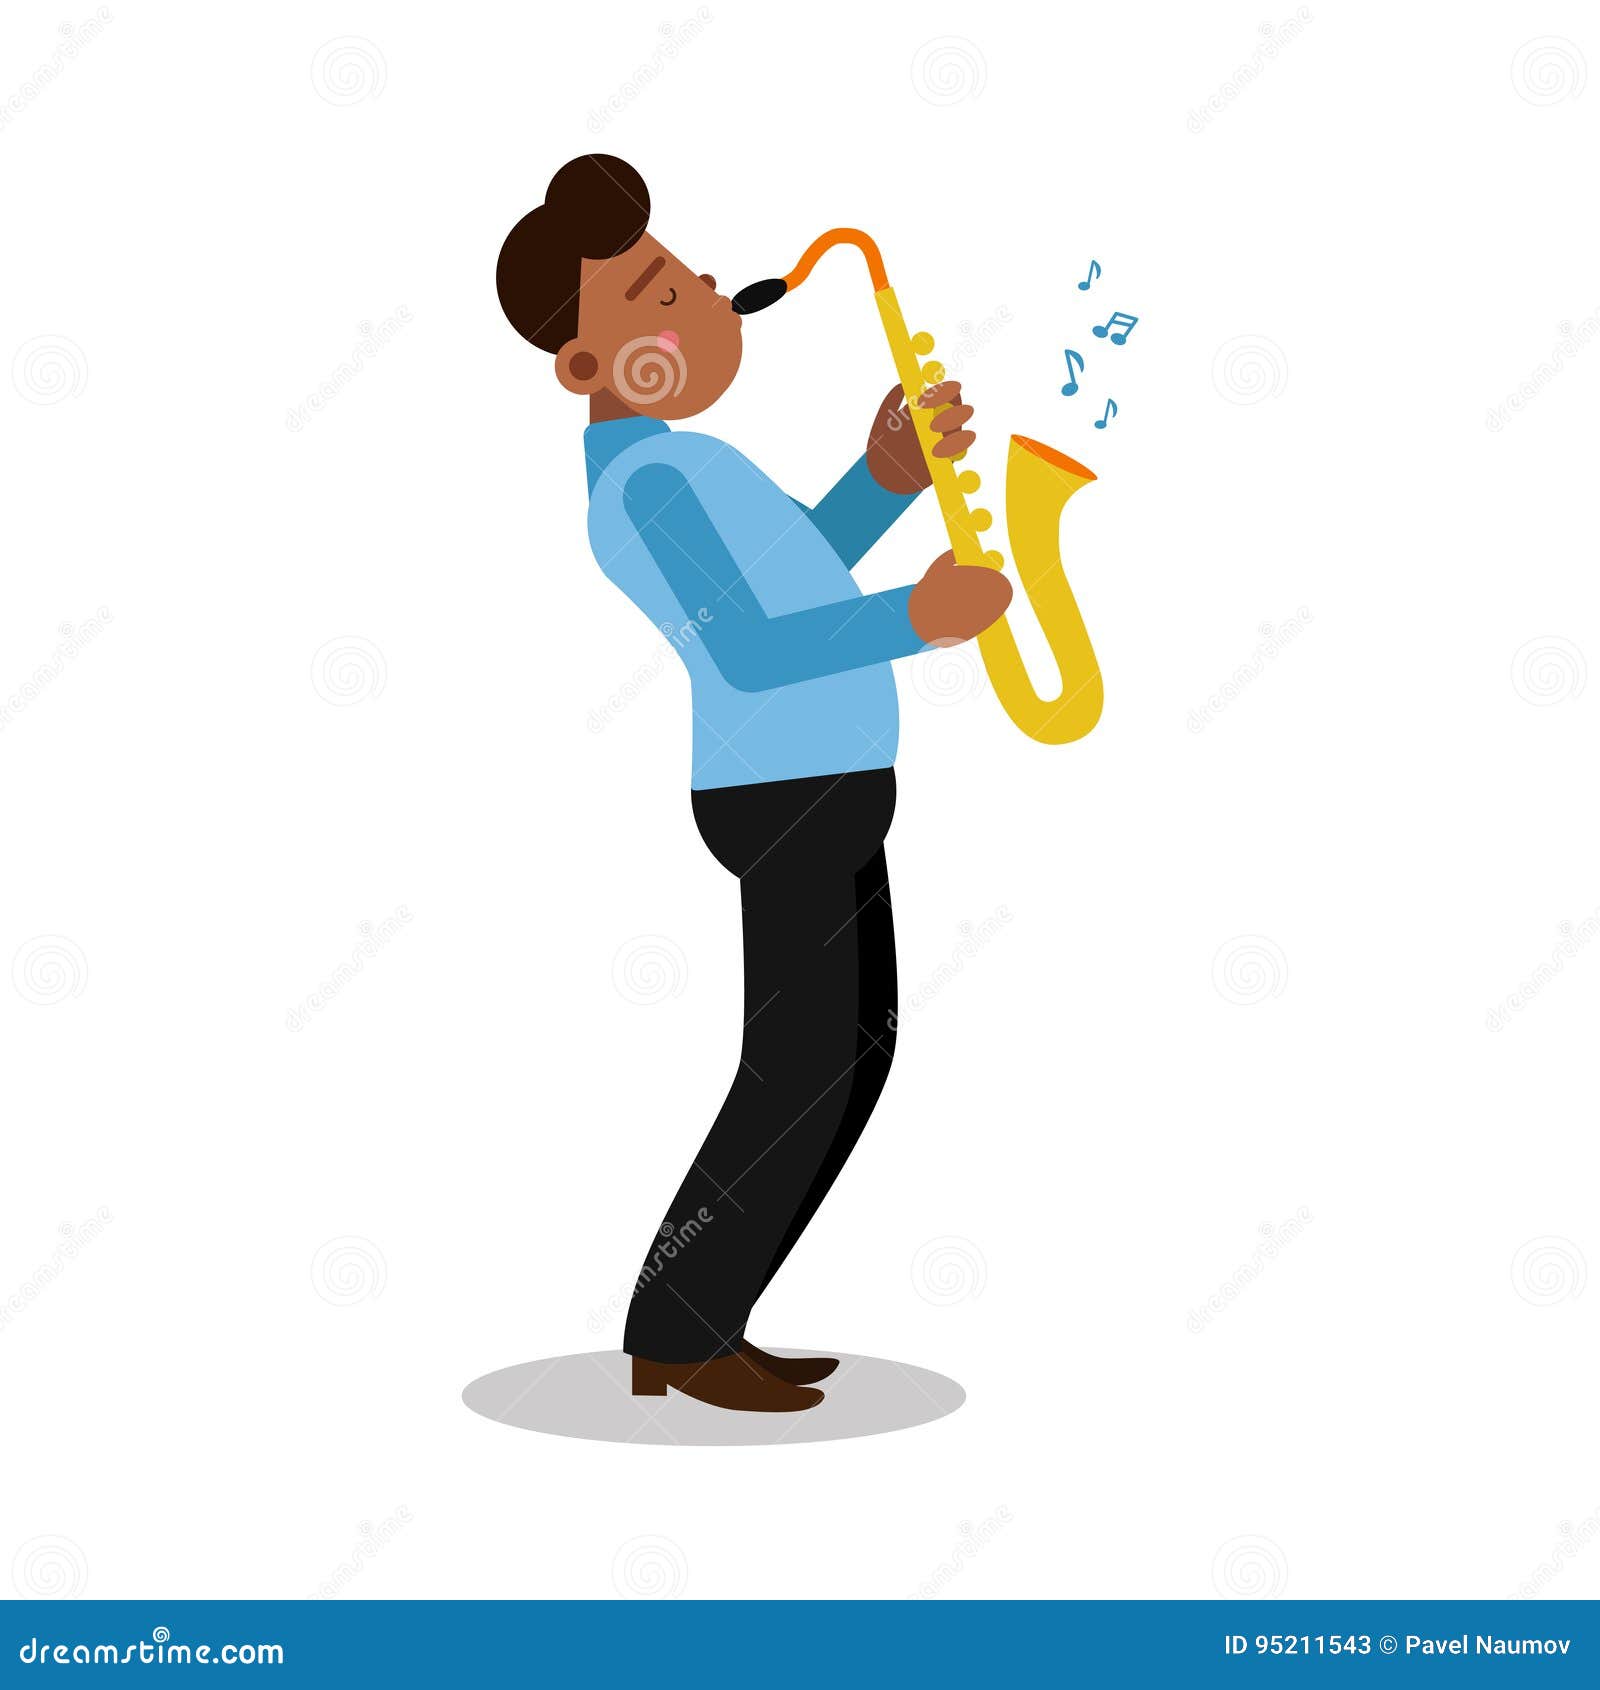 Saxophone | Free Stock Photo | Illustration of a man 